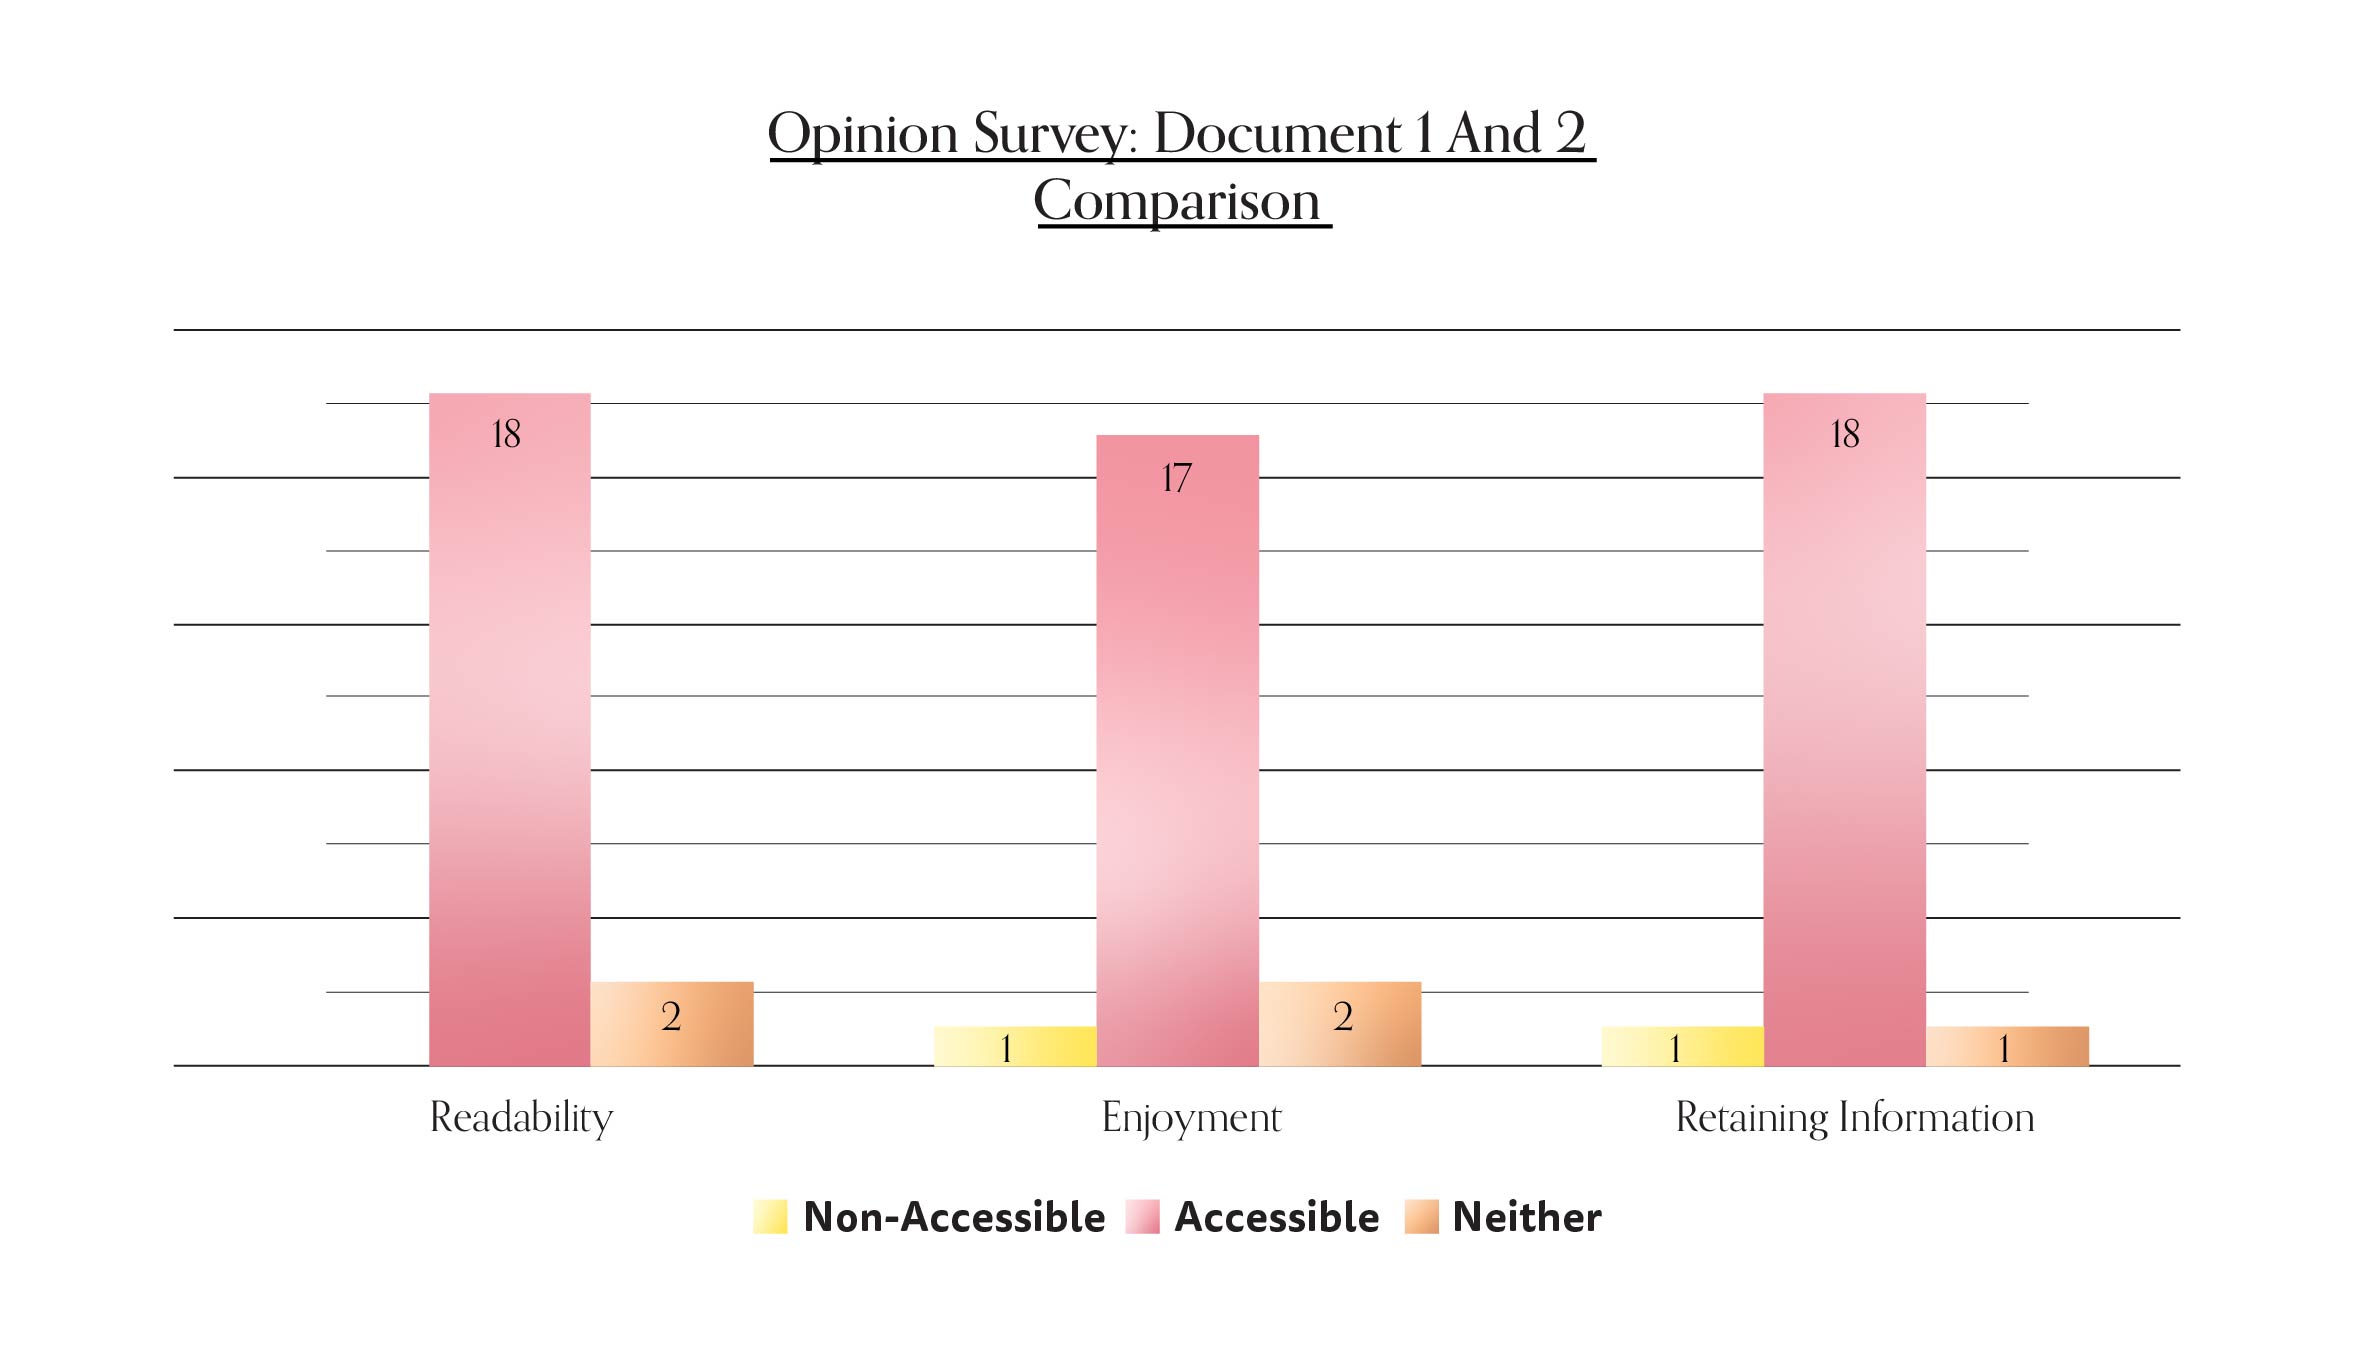 Figure 2. Opinion Survey: Document 1 and 2 Comparison